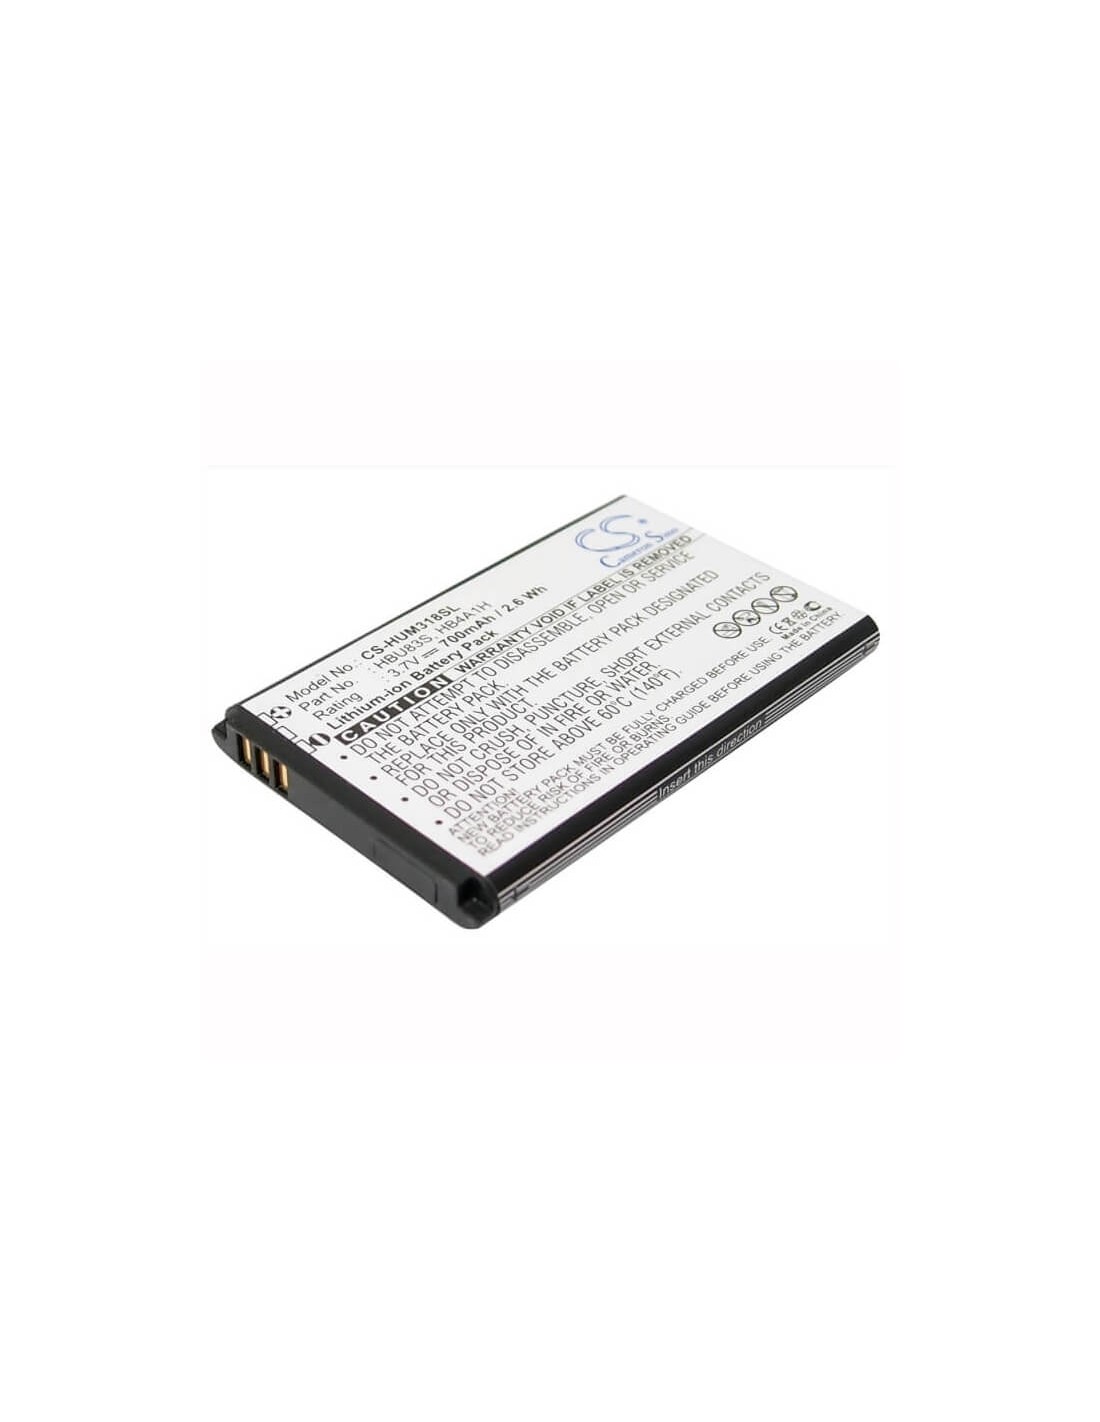 Battery for Huawei M318, U120, U121 3.7V, 700mAh - 2.59Wh